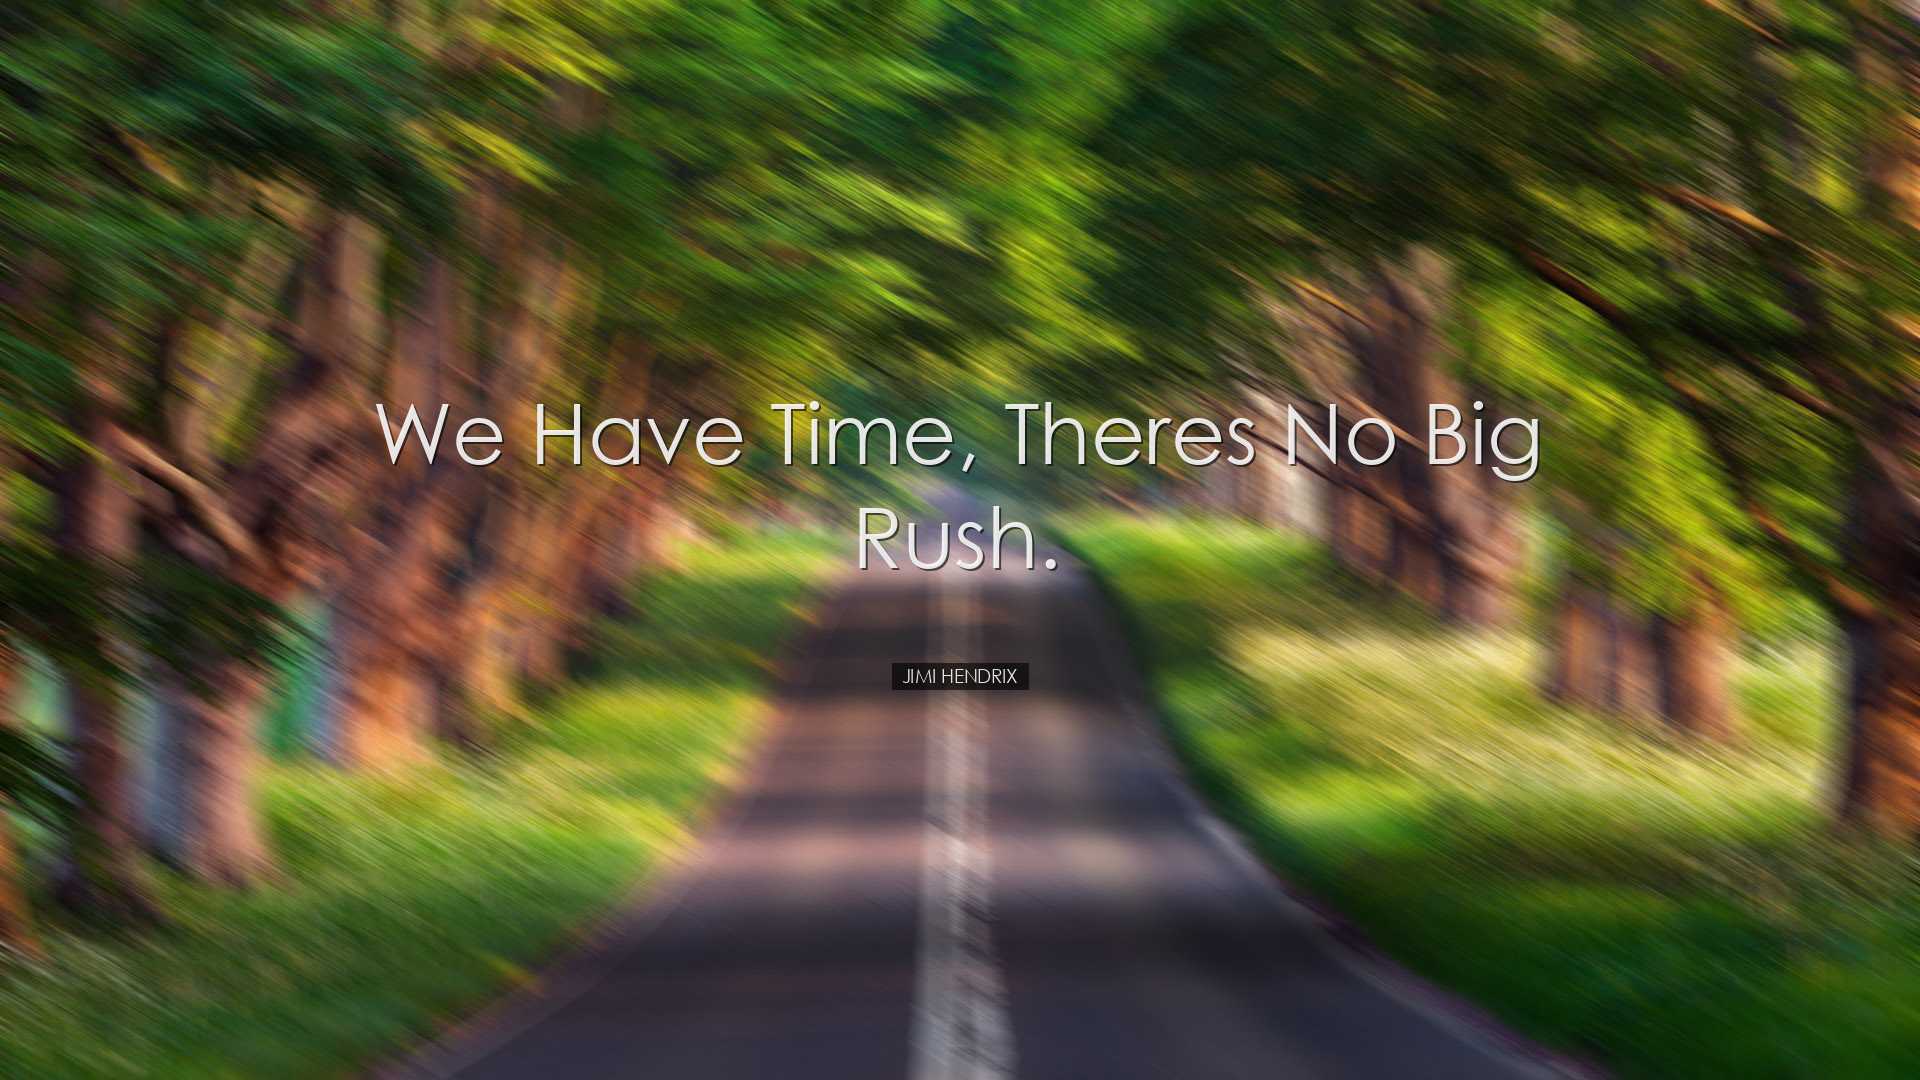 We have time, theres no big rush. - Jimi Hendrix